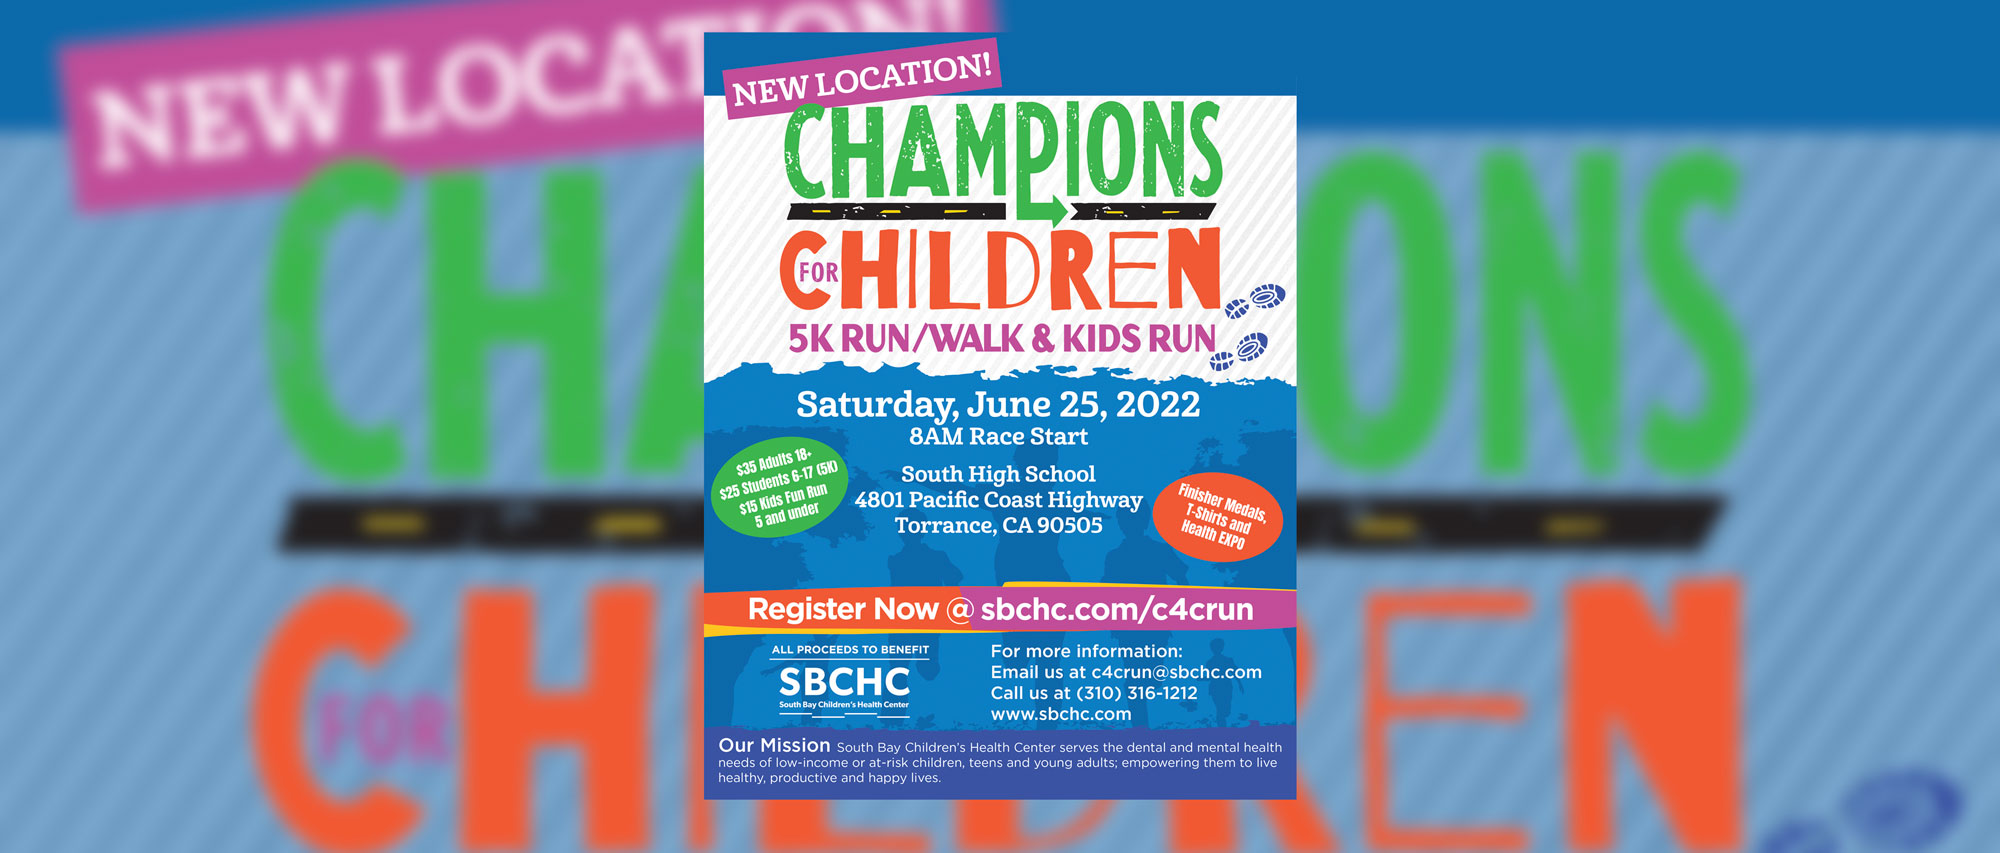 South Bay Children’s Health Center Champions for Children 5K Run/Walk and Kids Run